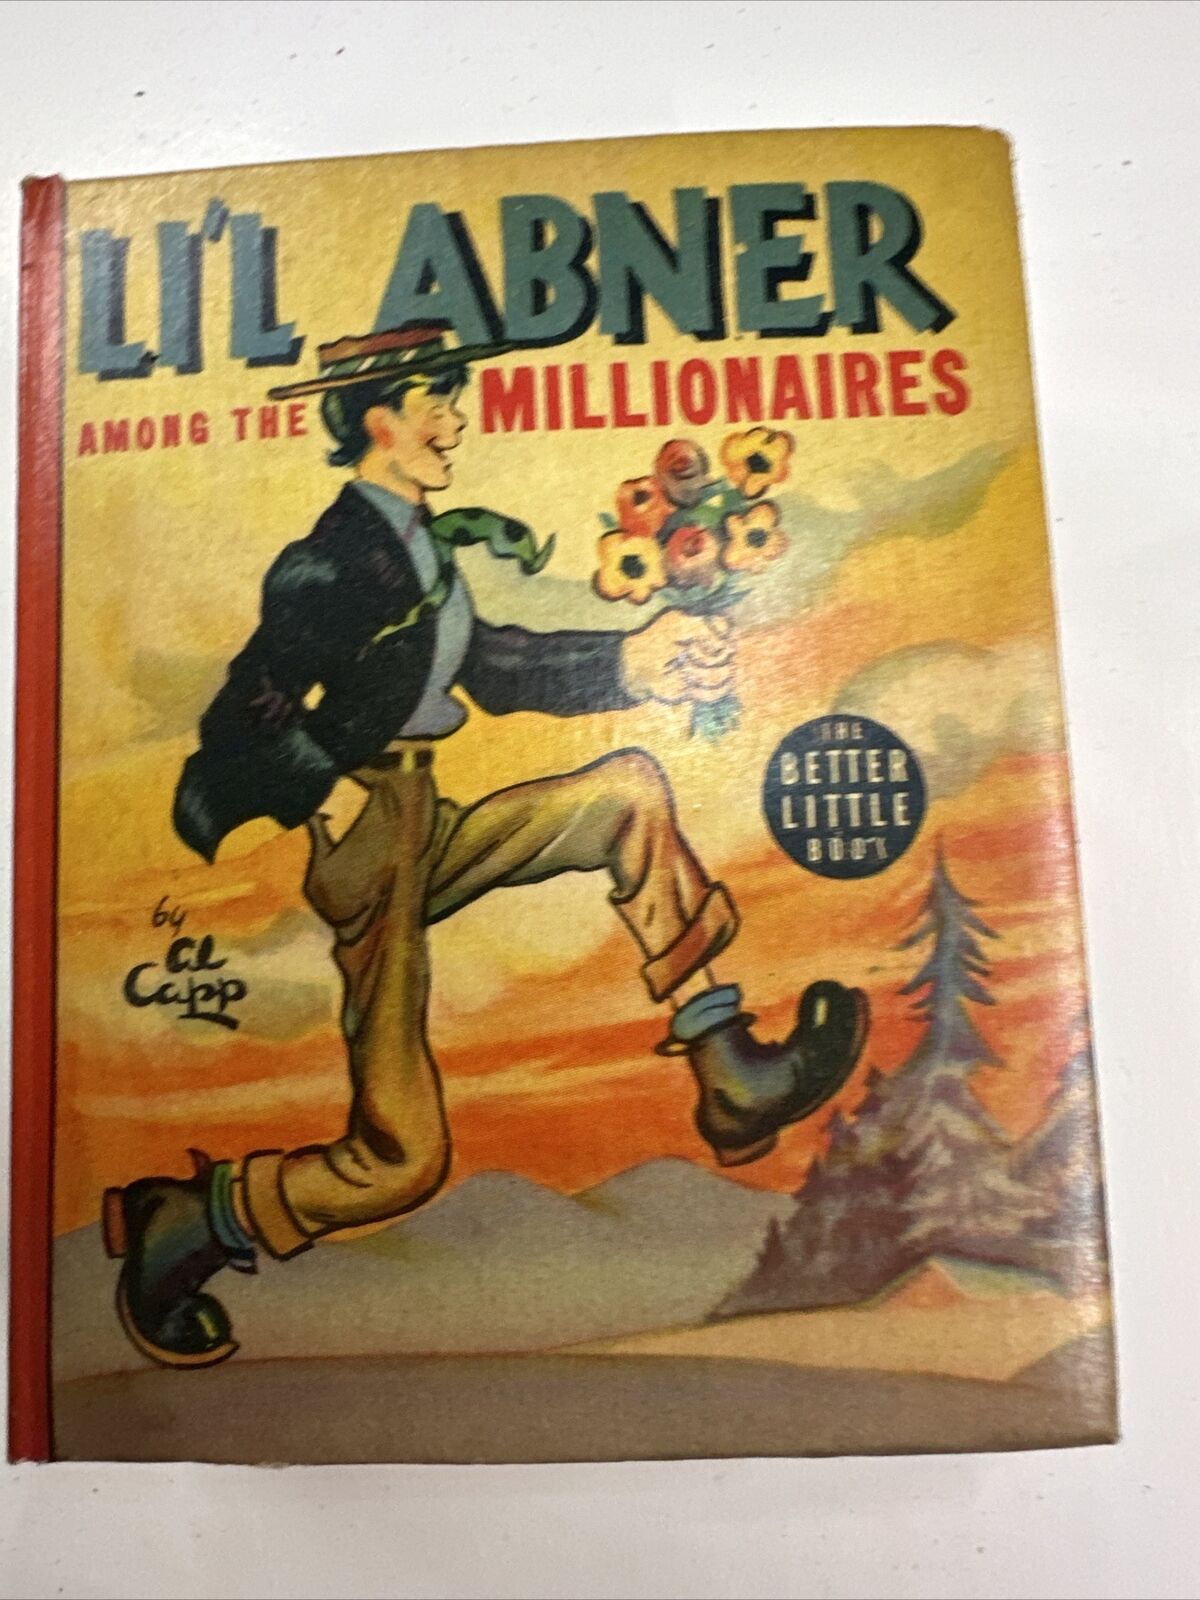 1939 Big Little Book Li'l Abner Among the Millionaires, Whitman - #1401